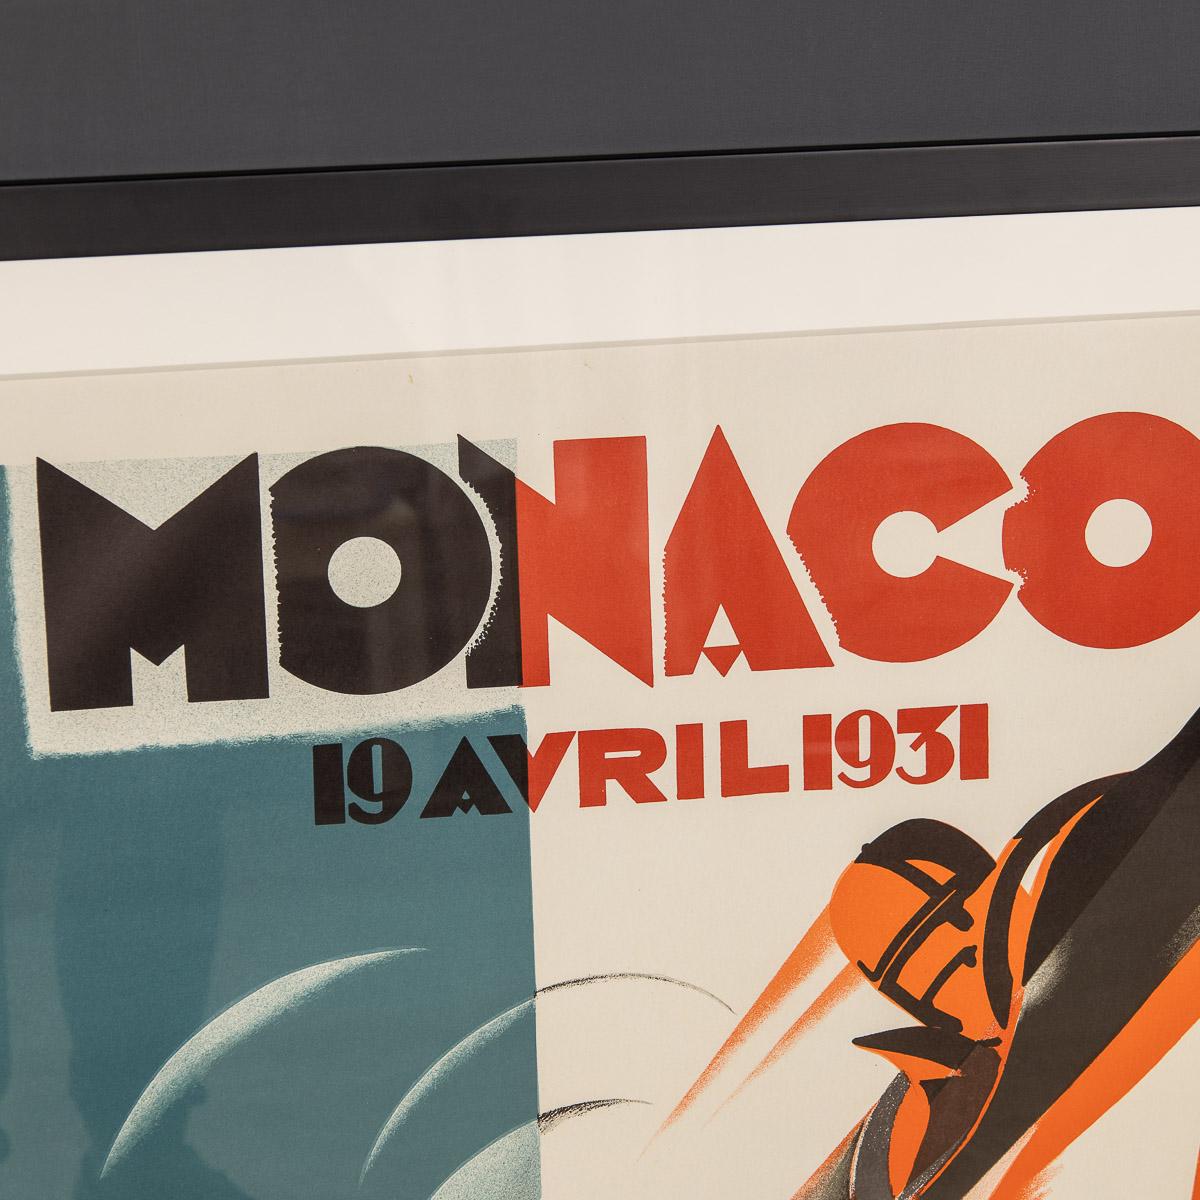 Monacan 20thC Reprint Of The Monaco 1931 Grandprix Poster c.1960